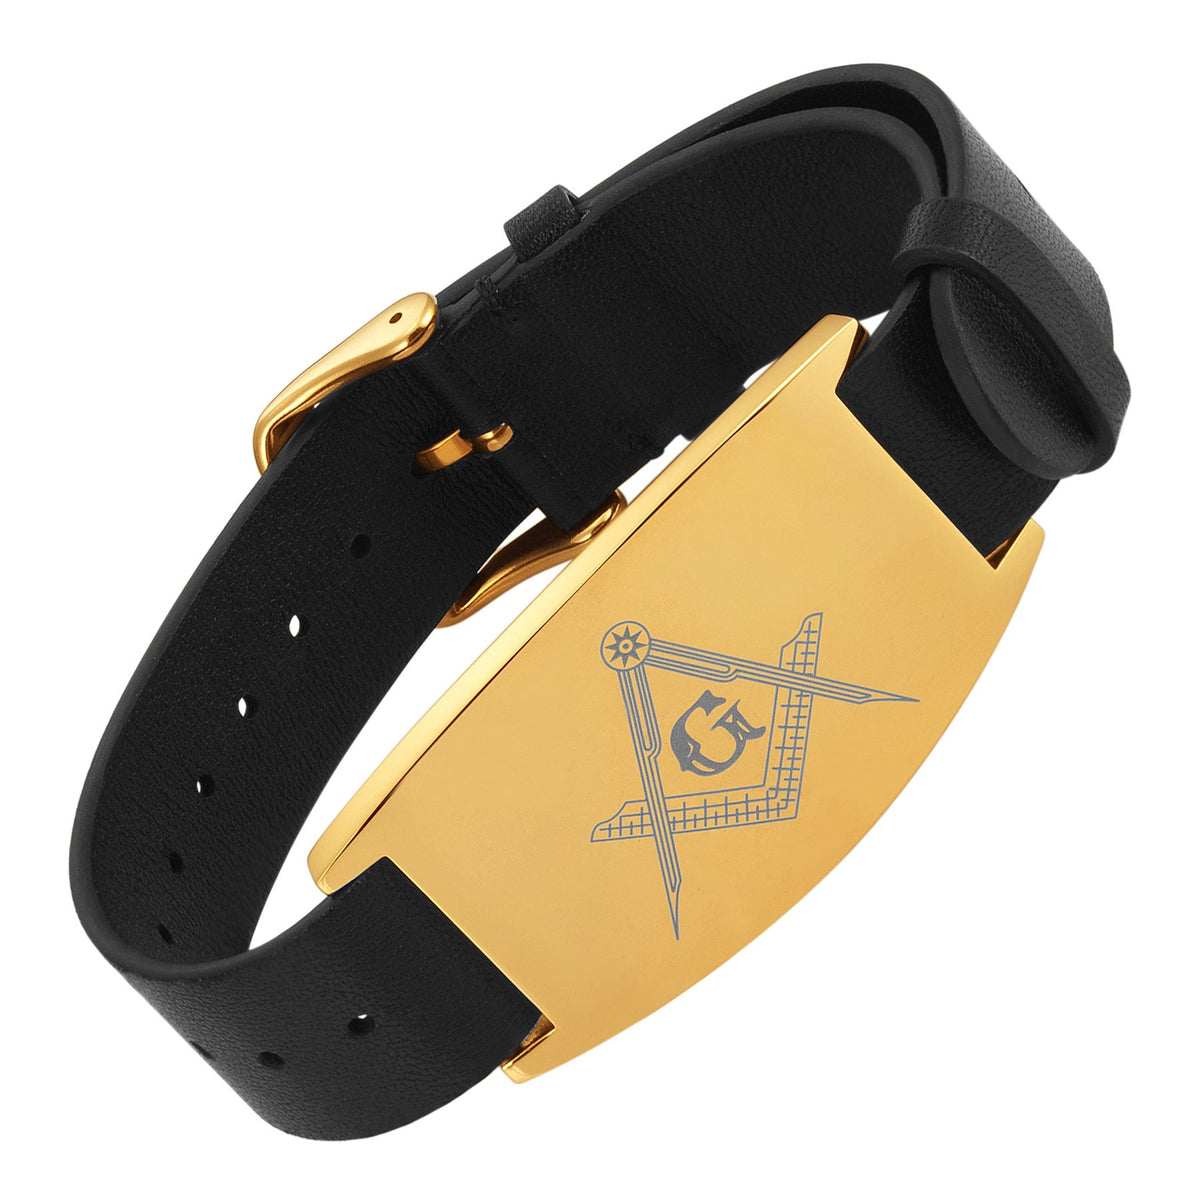 MasonicMan Leather Freemasonry Masonic Bracelet with Square and Compass in Gift Box …